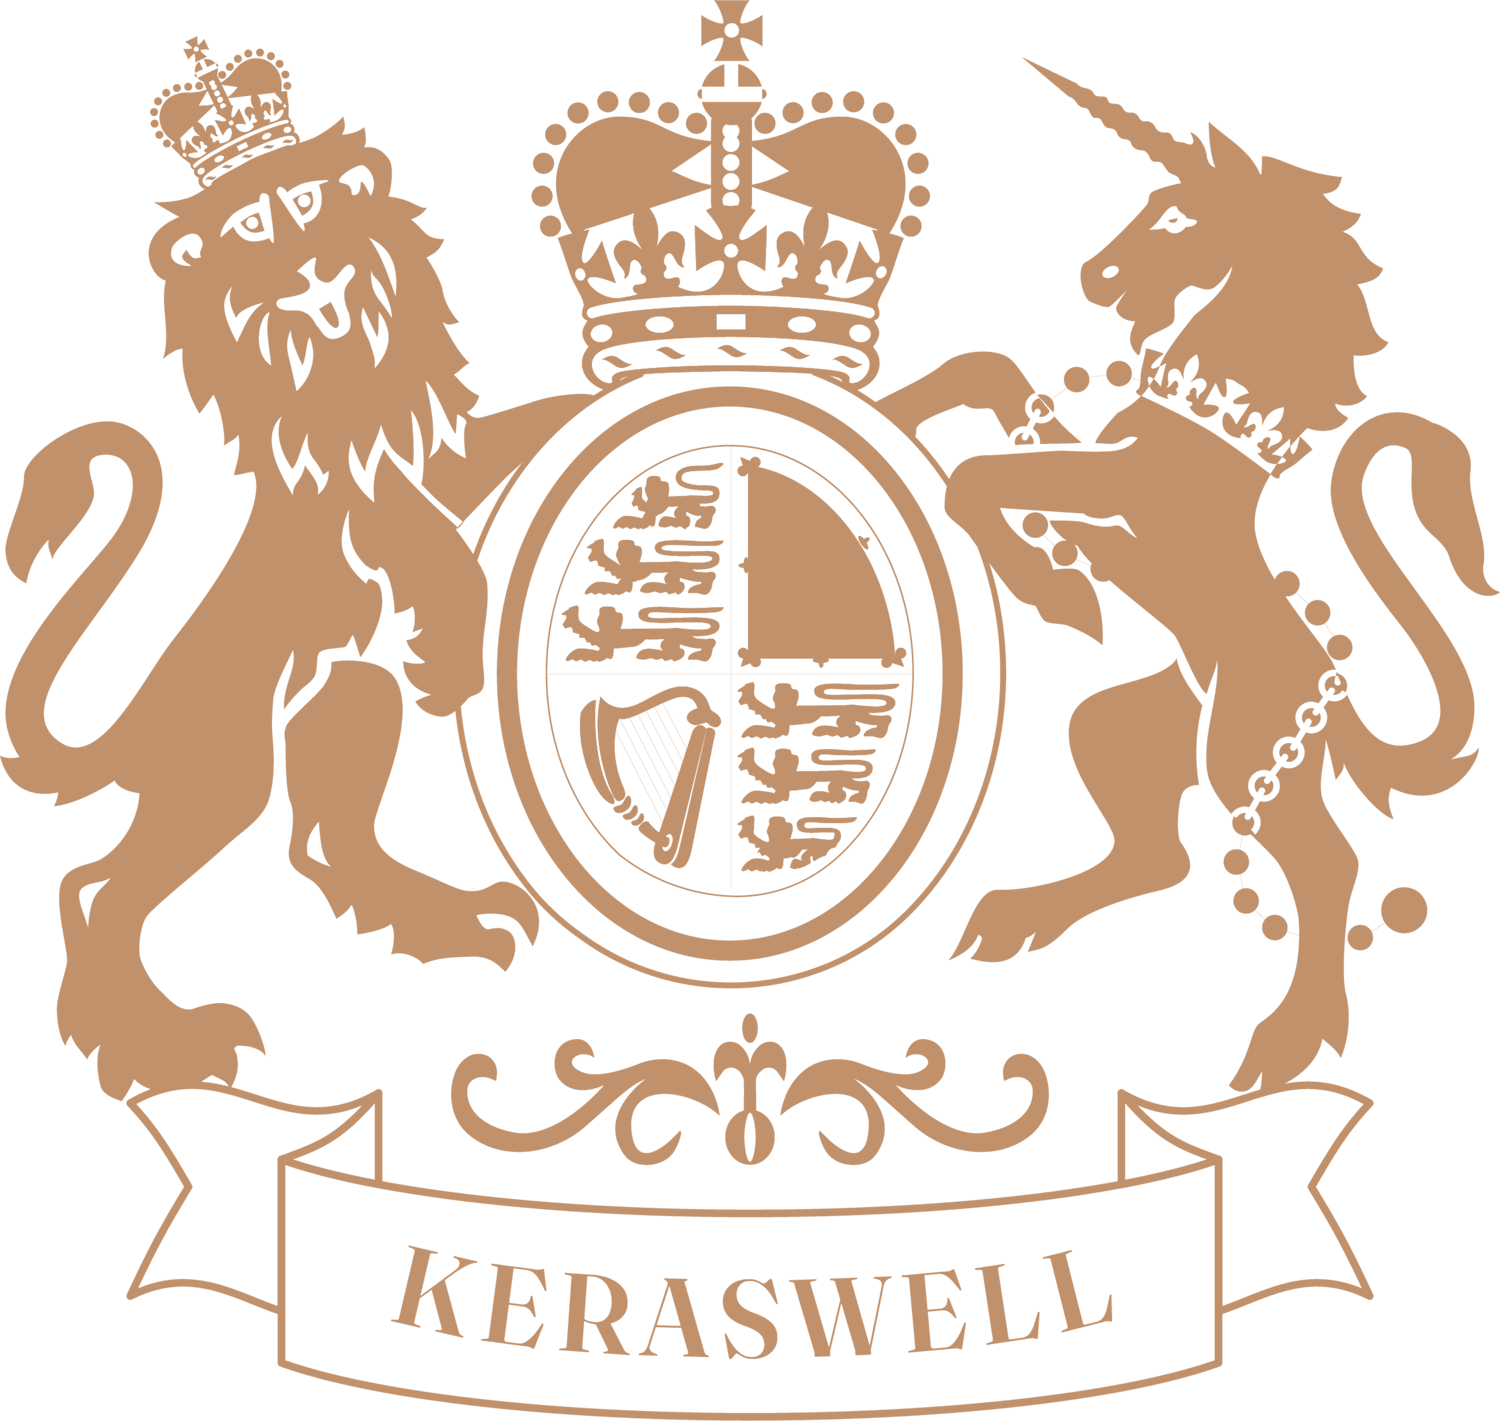 Keraswell logo